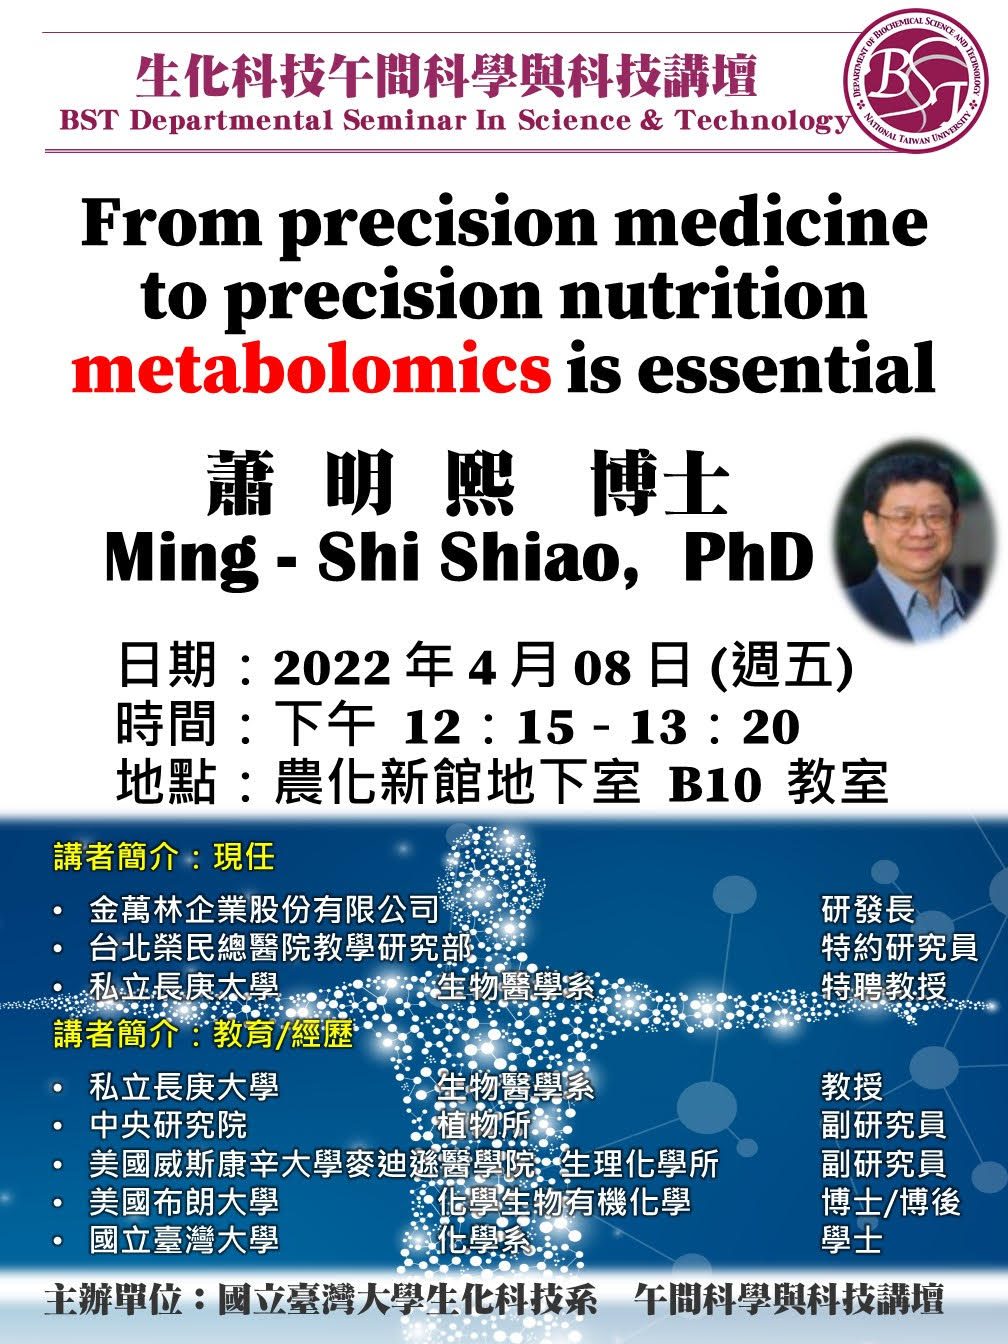 【午間科學與科技講壇】(4/08/2022， 週五) 蕭明熙教授-- From precision medicine to precision nutrition metabolomics is essential